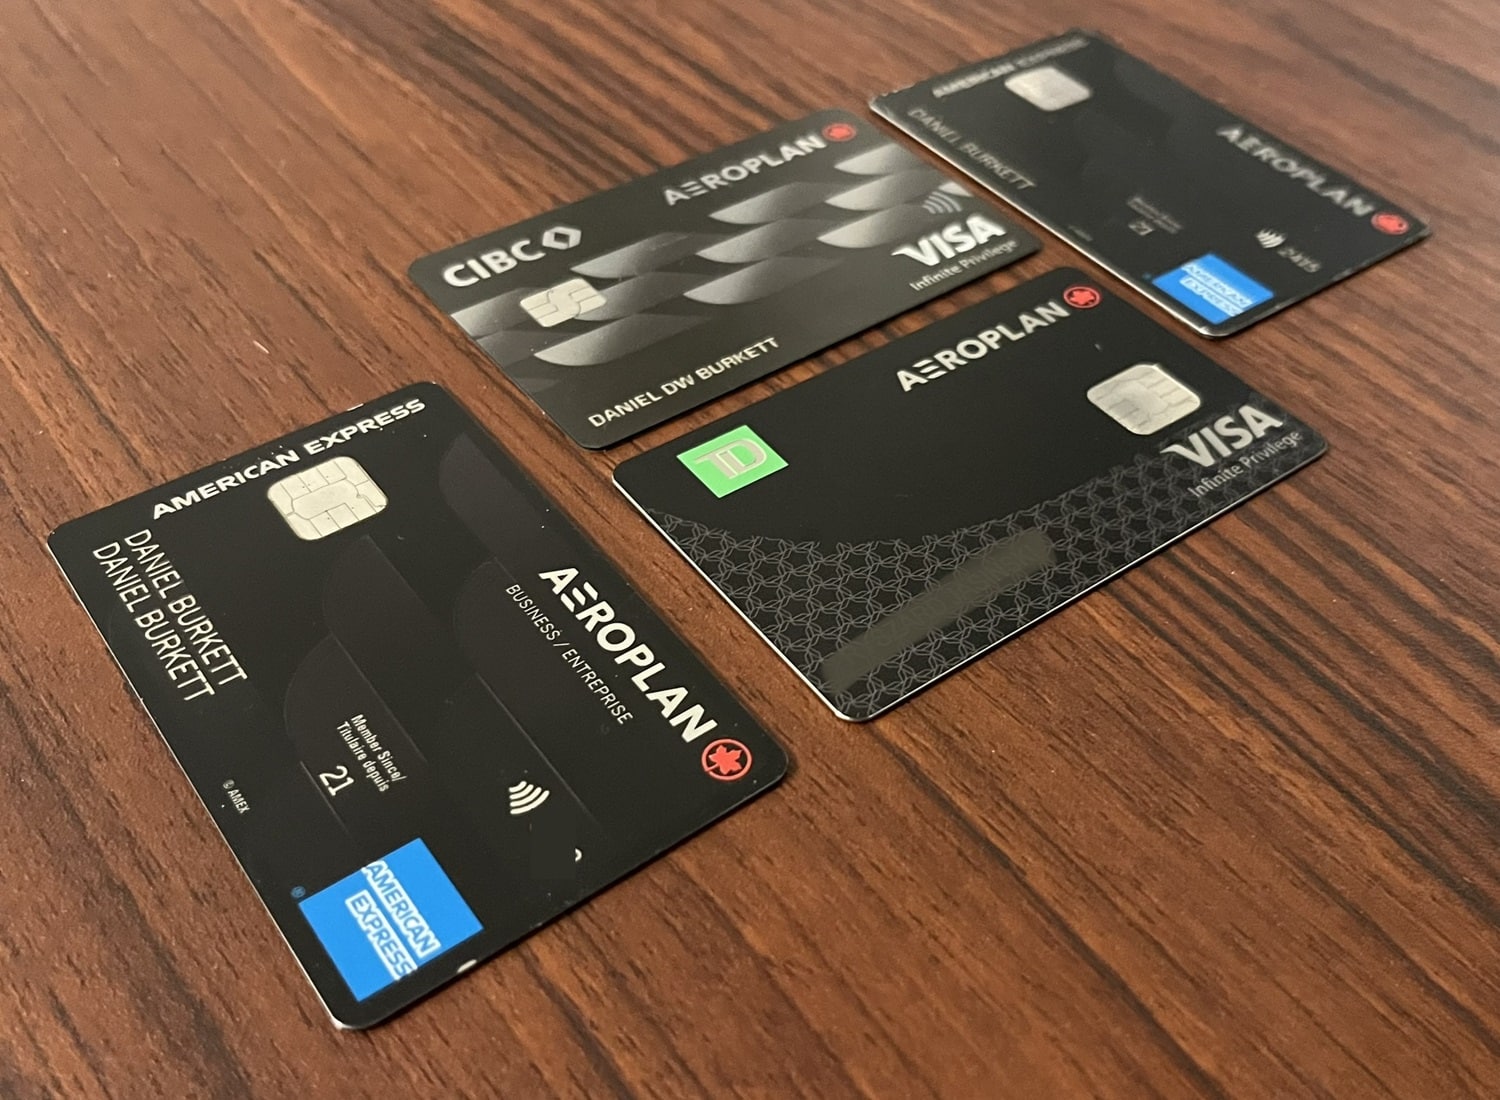 canadian aeroplan premium credit cards on table